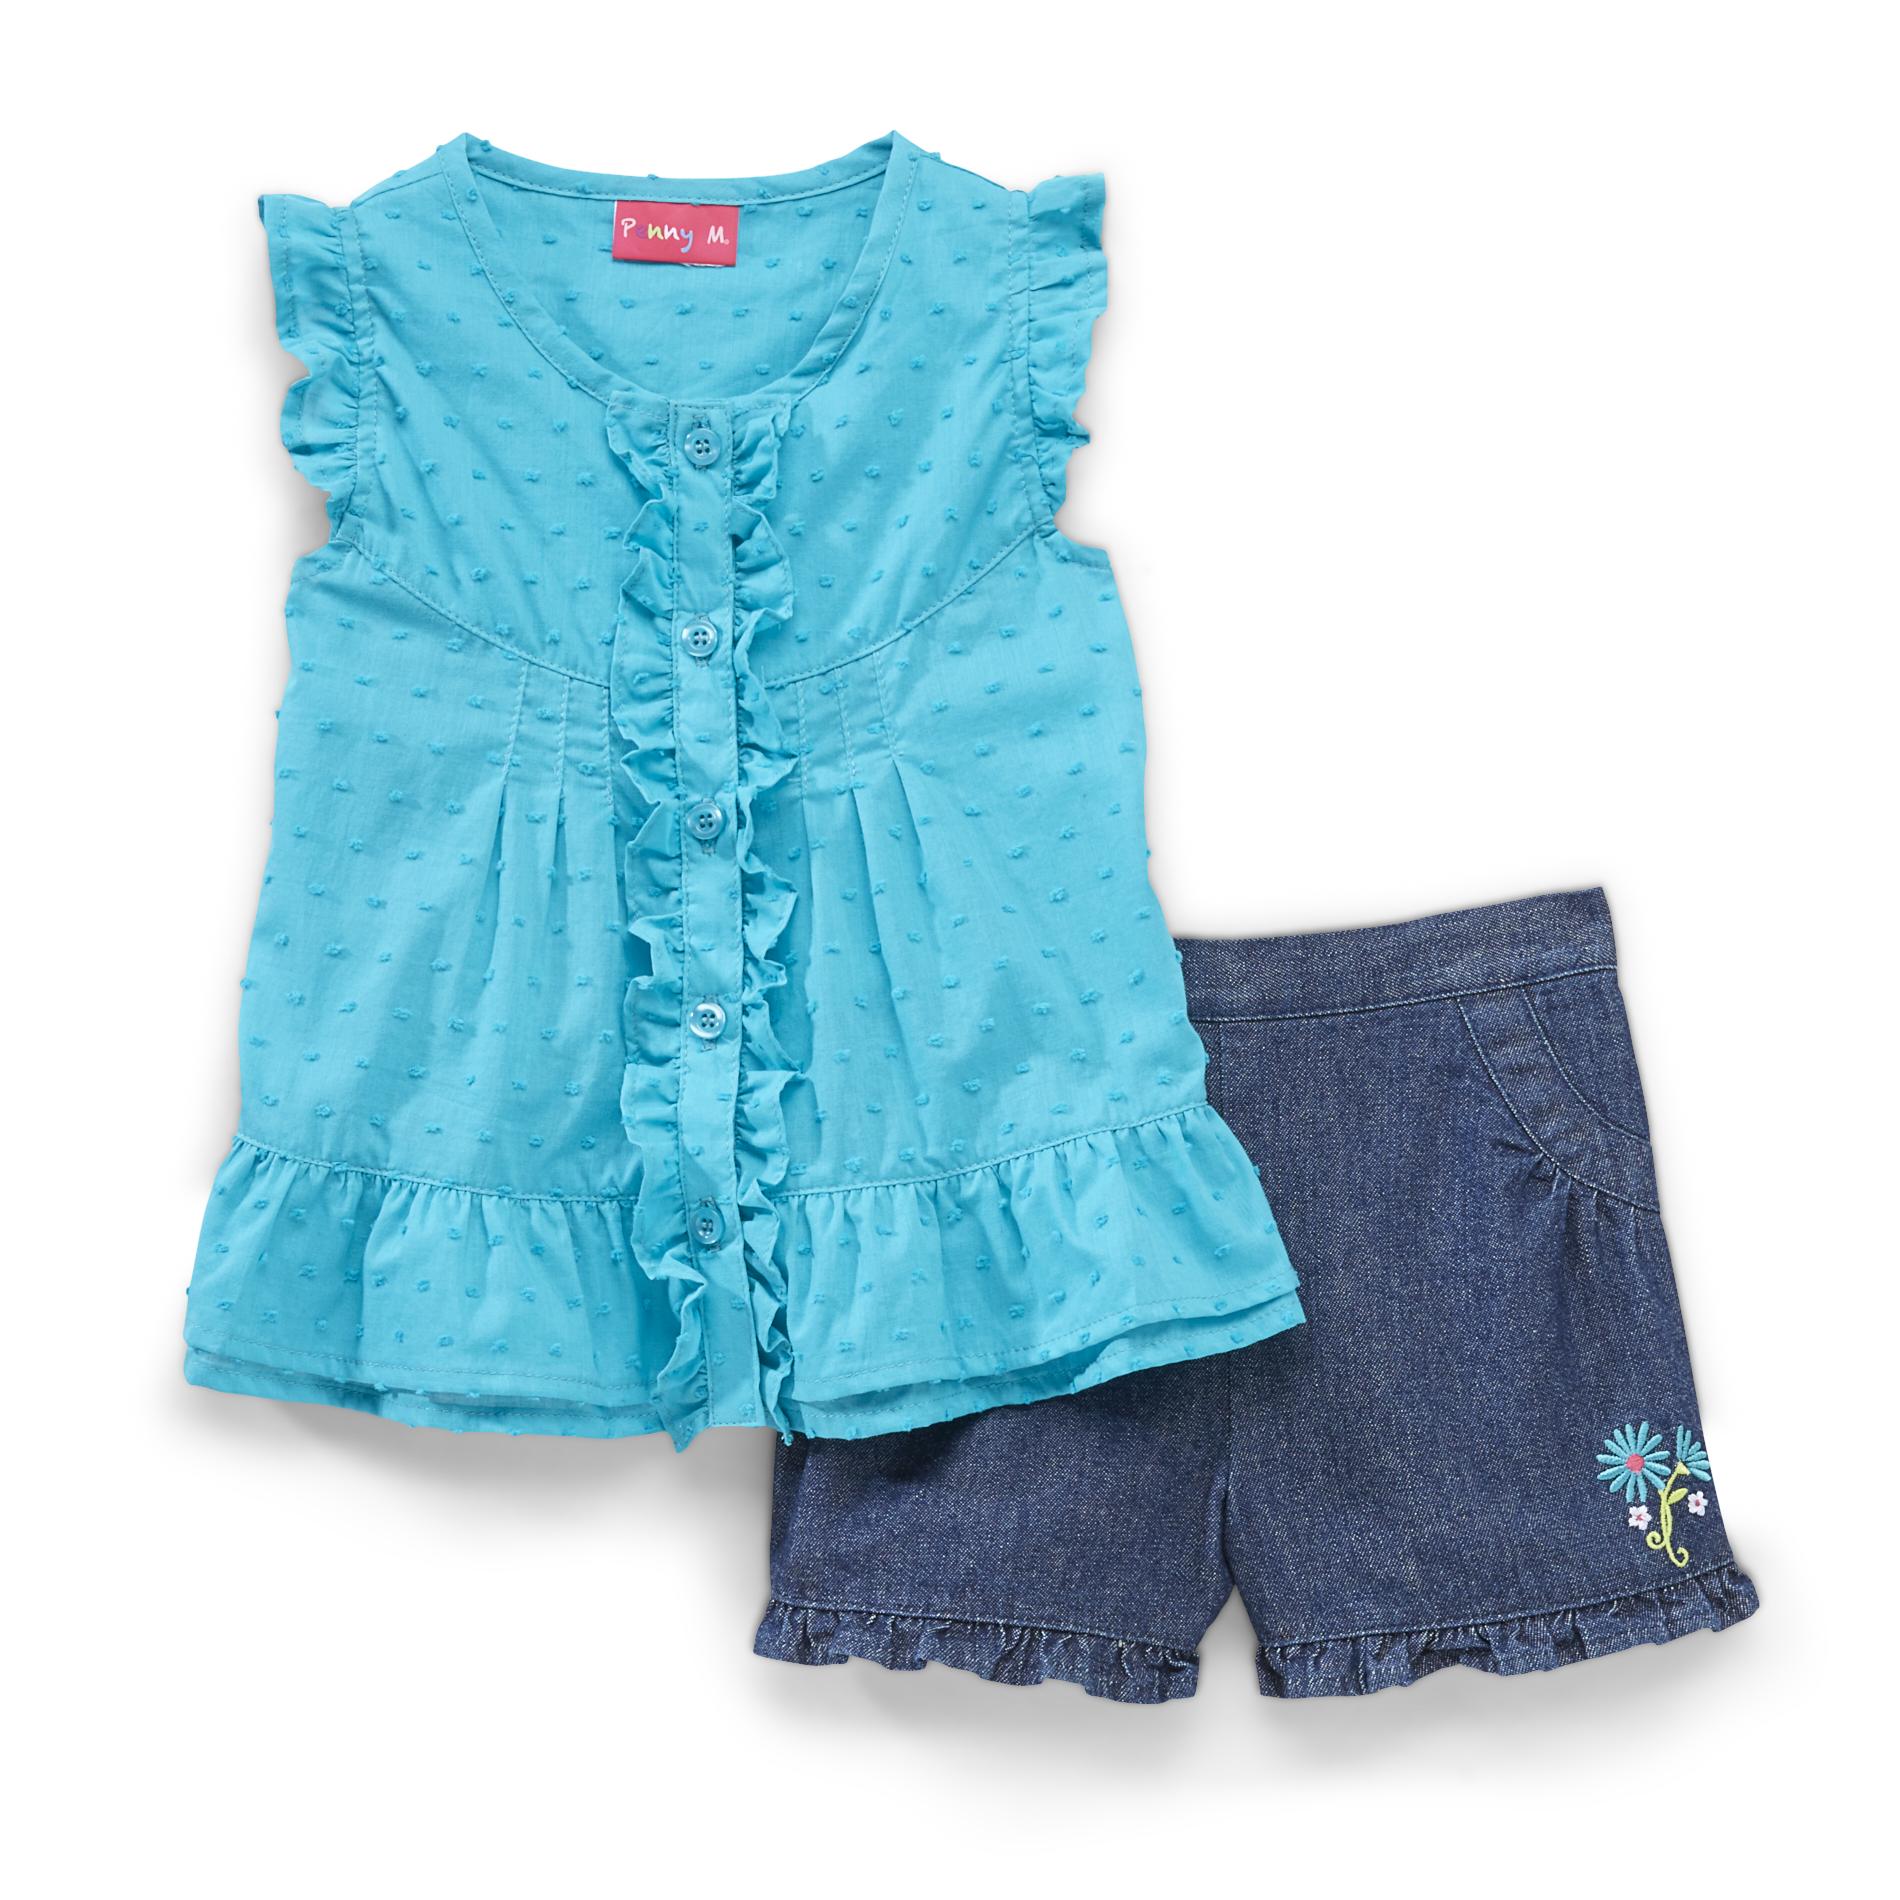 Penny M Infant & Toddler Girl's Cap Sleeve Top & Denim Shorts